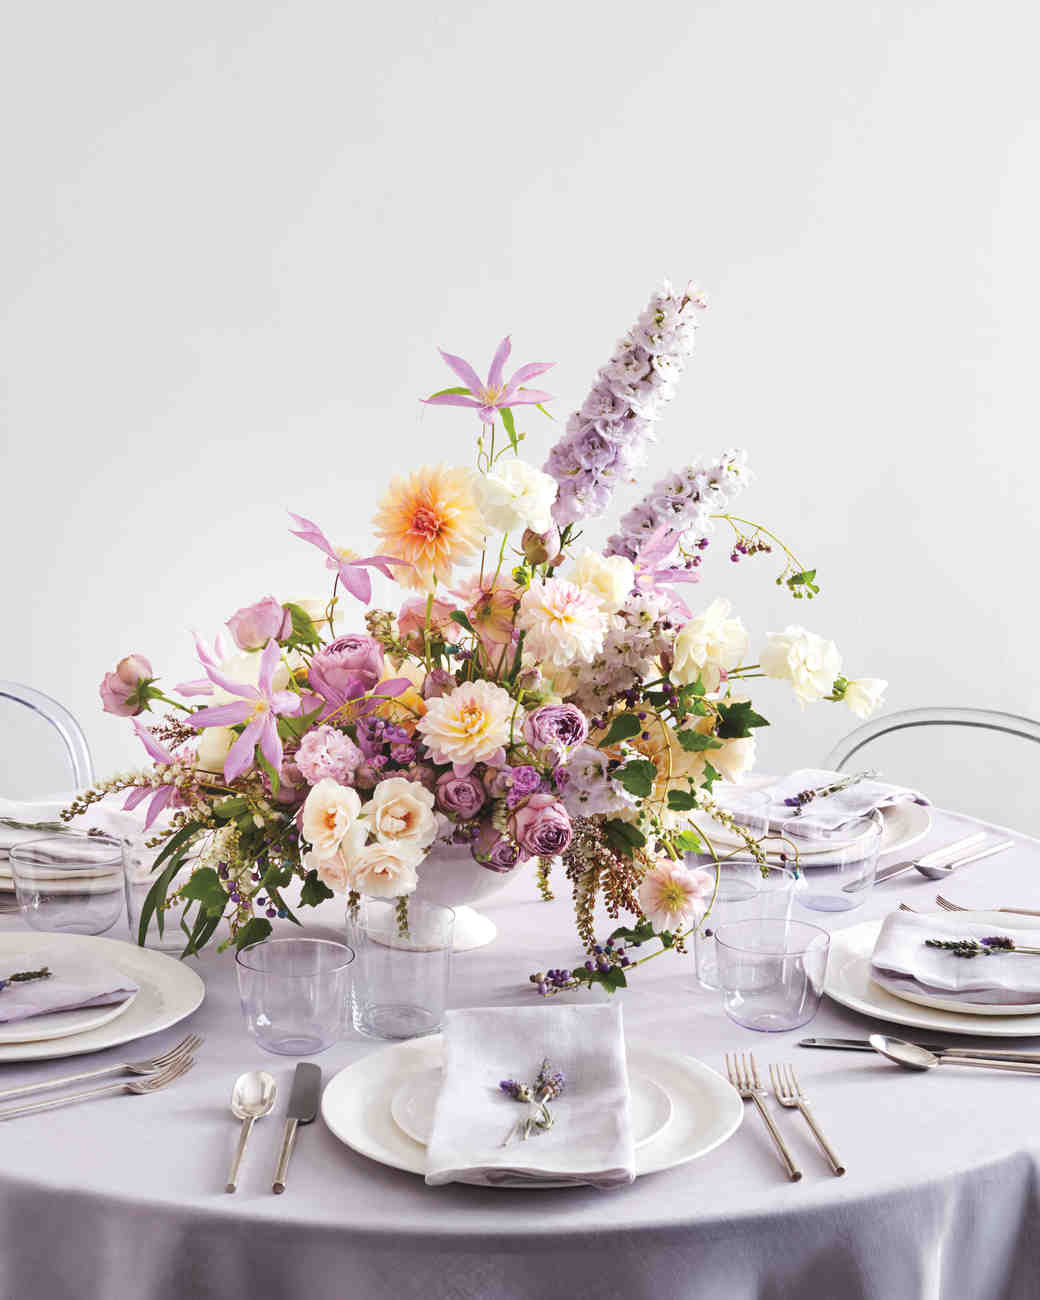 DIY Wedding Floral Arrangements
 23 DIY Wedding Centerpieces We Love